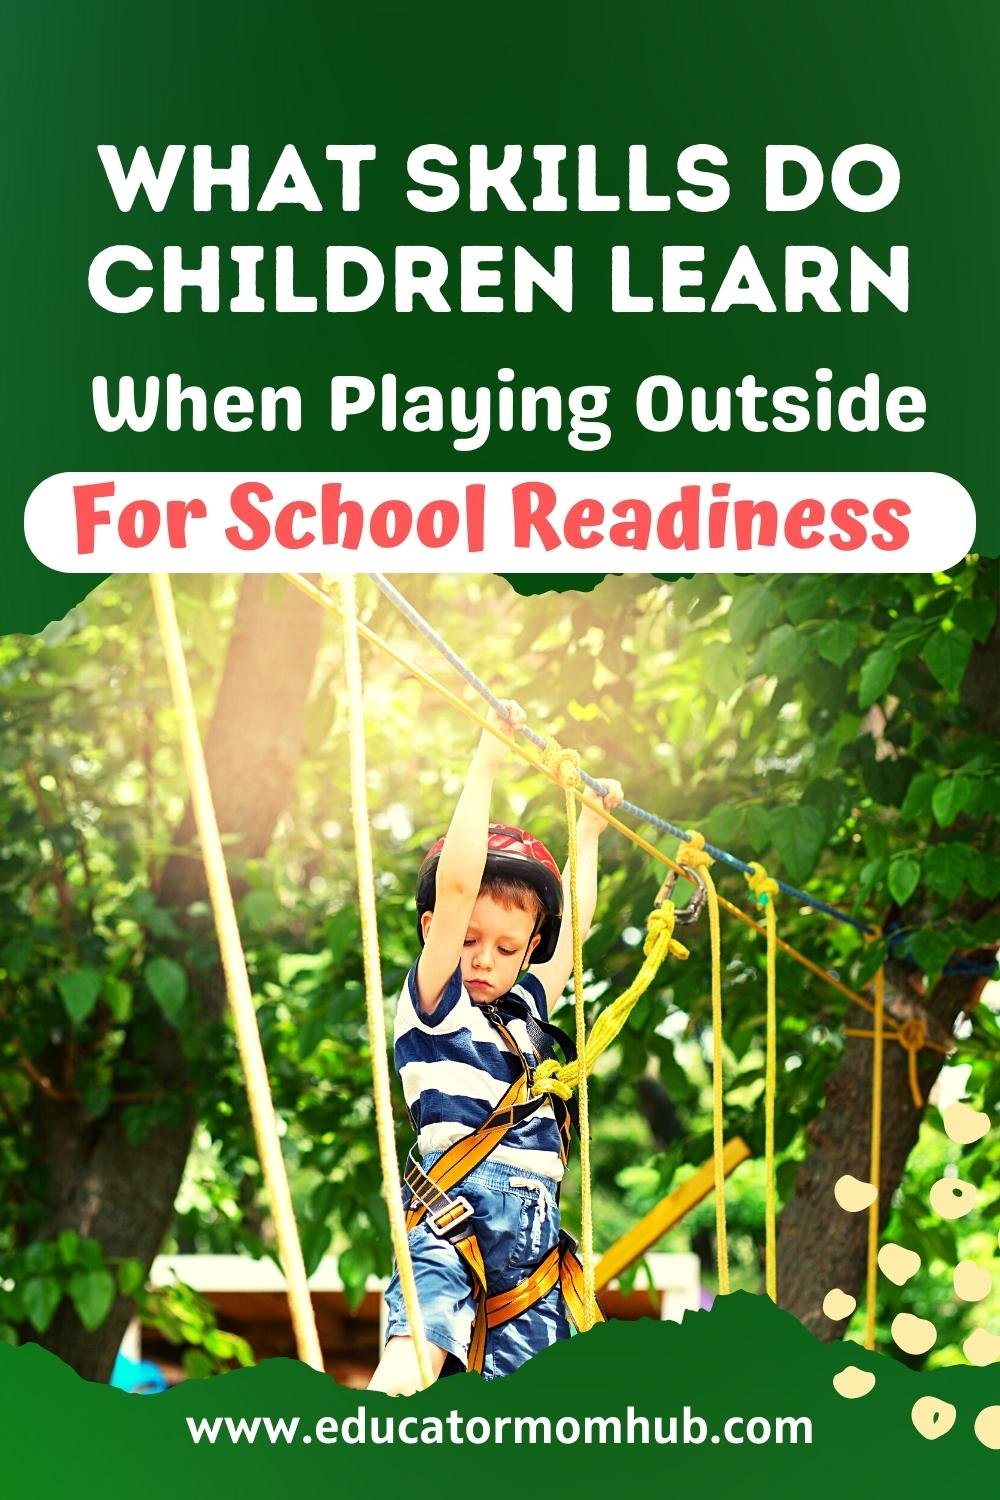 Benefits of Children Playing Outdoors - California Business Journal